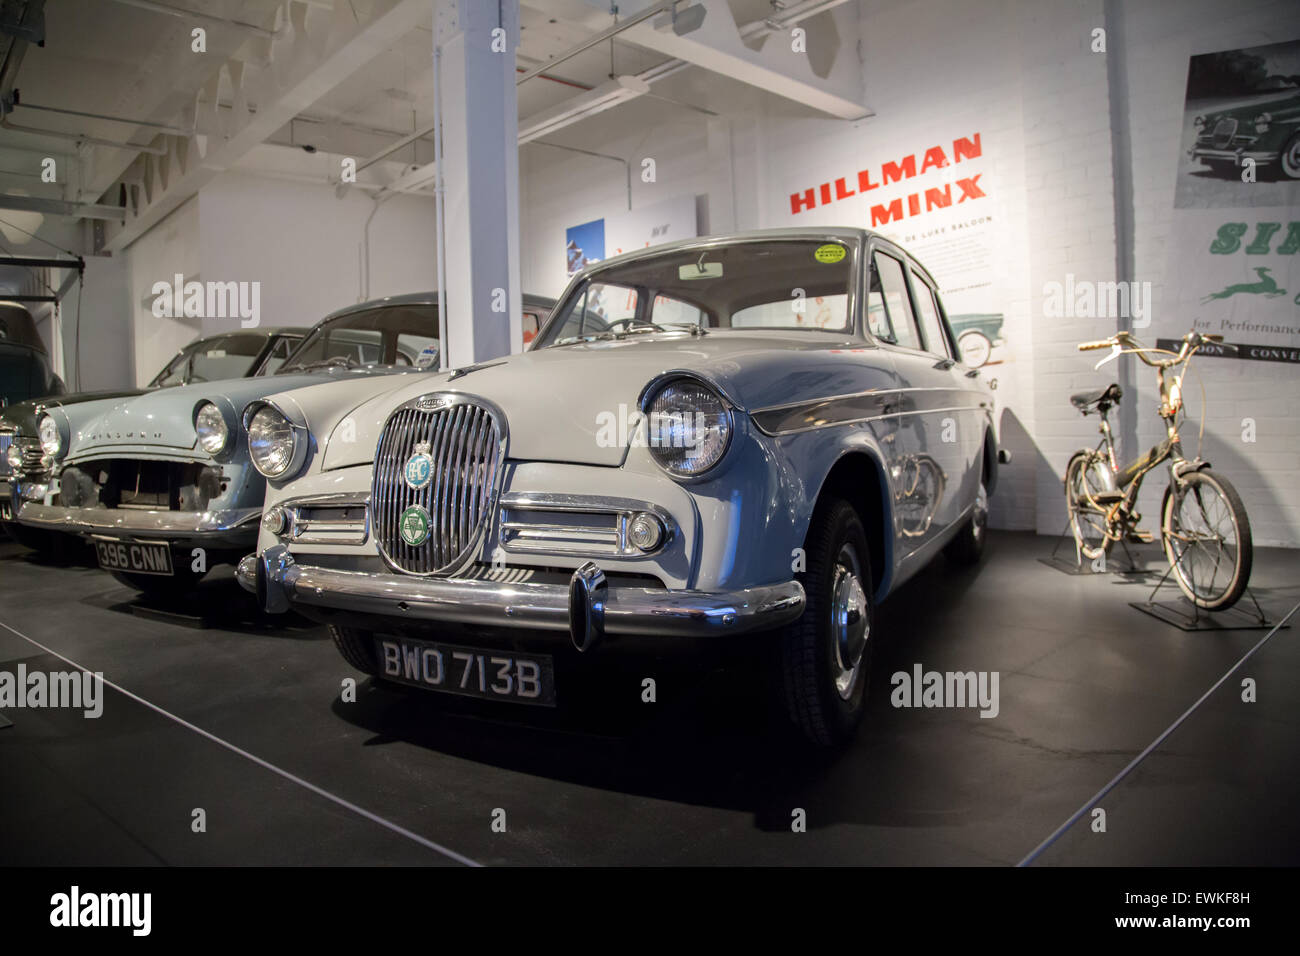 1960 Hillman Minx Easidrive Stock Photo